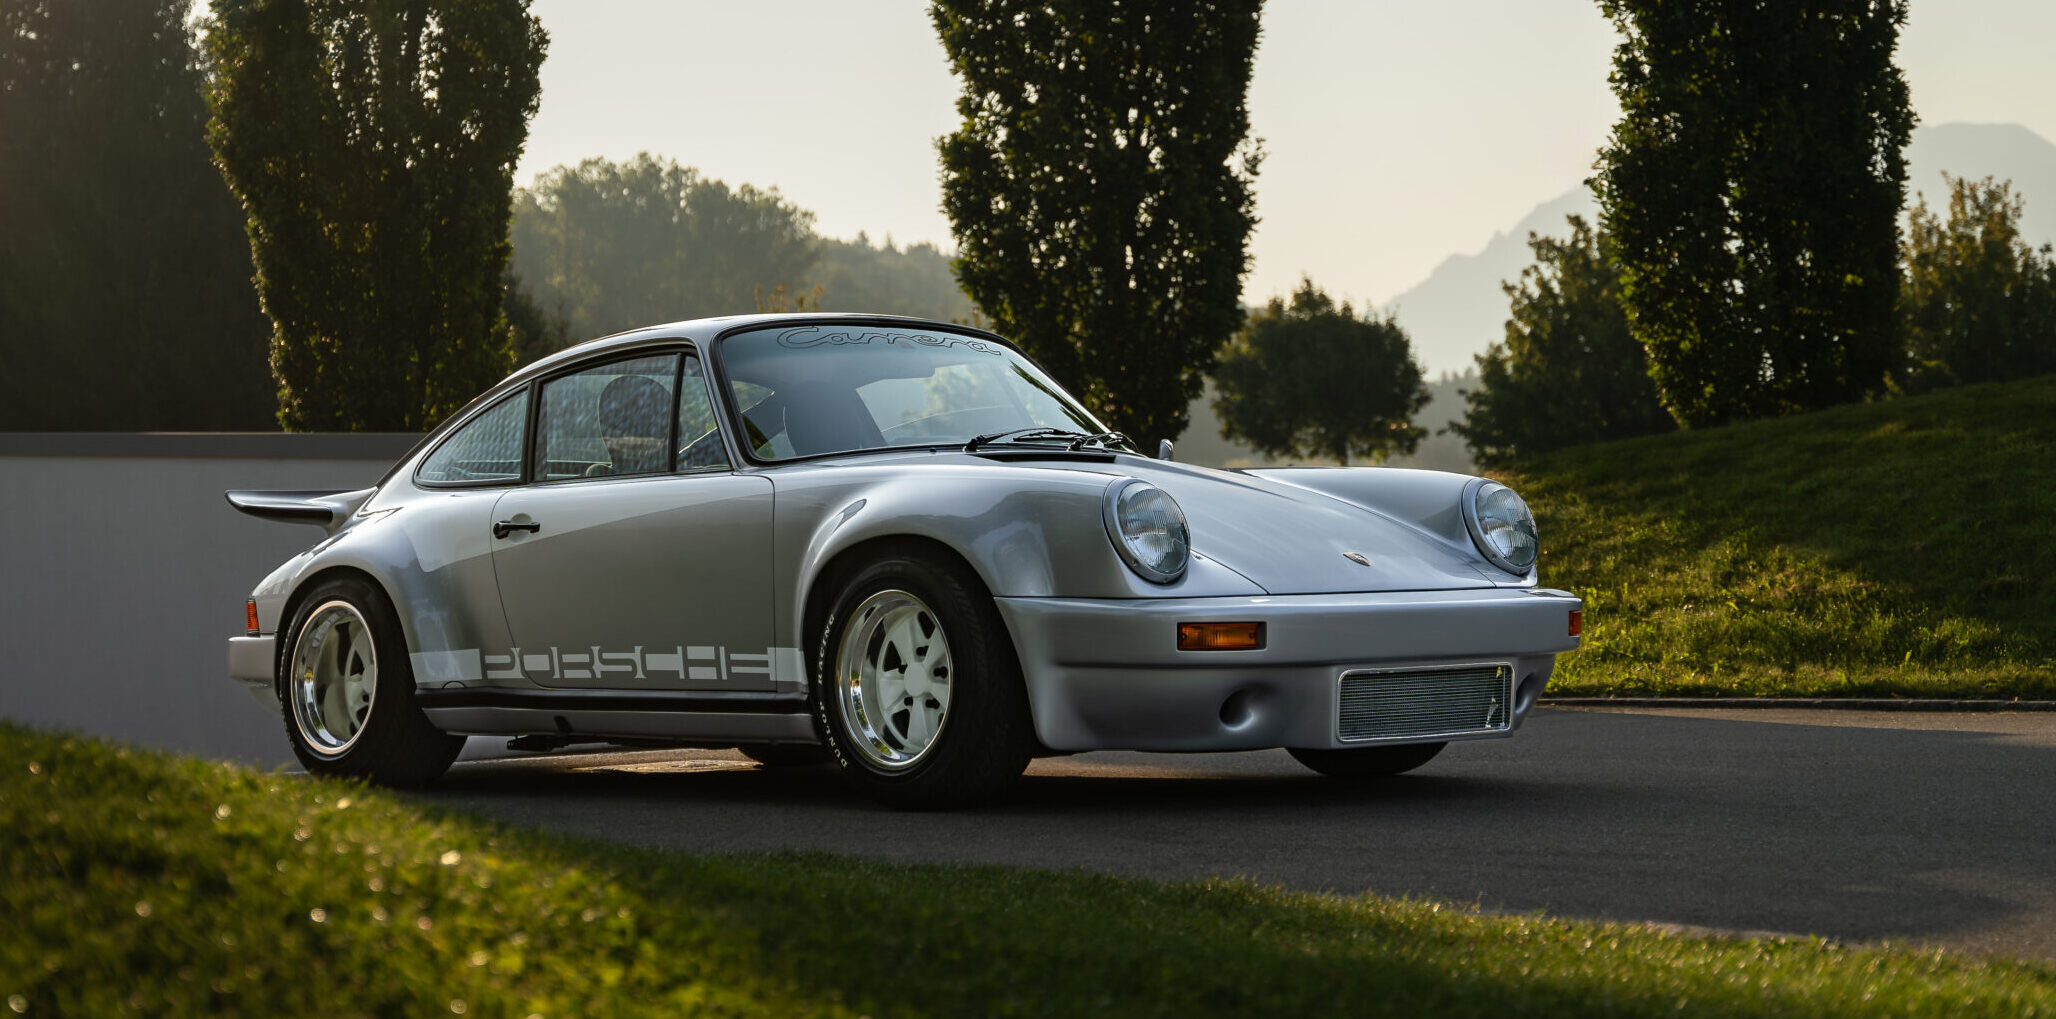 Concours of Elegance to Display Original 1973 Porsche 911 Turbo Prototype | THE SHOP